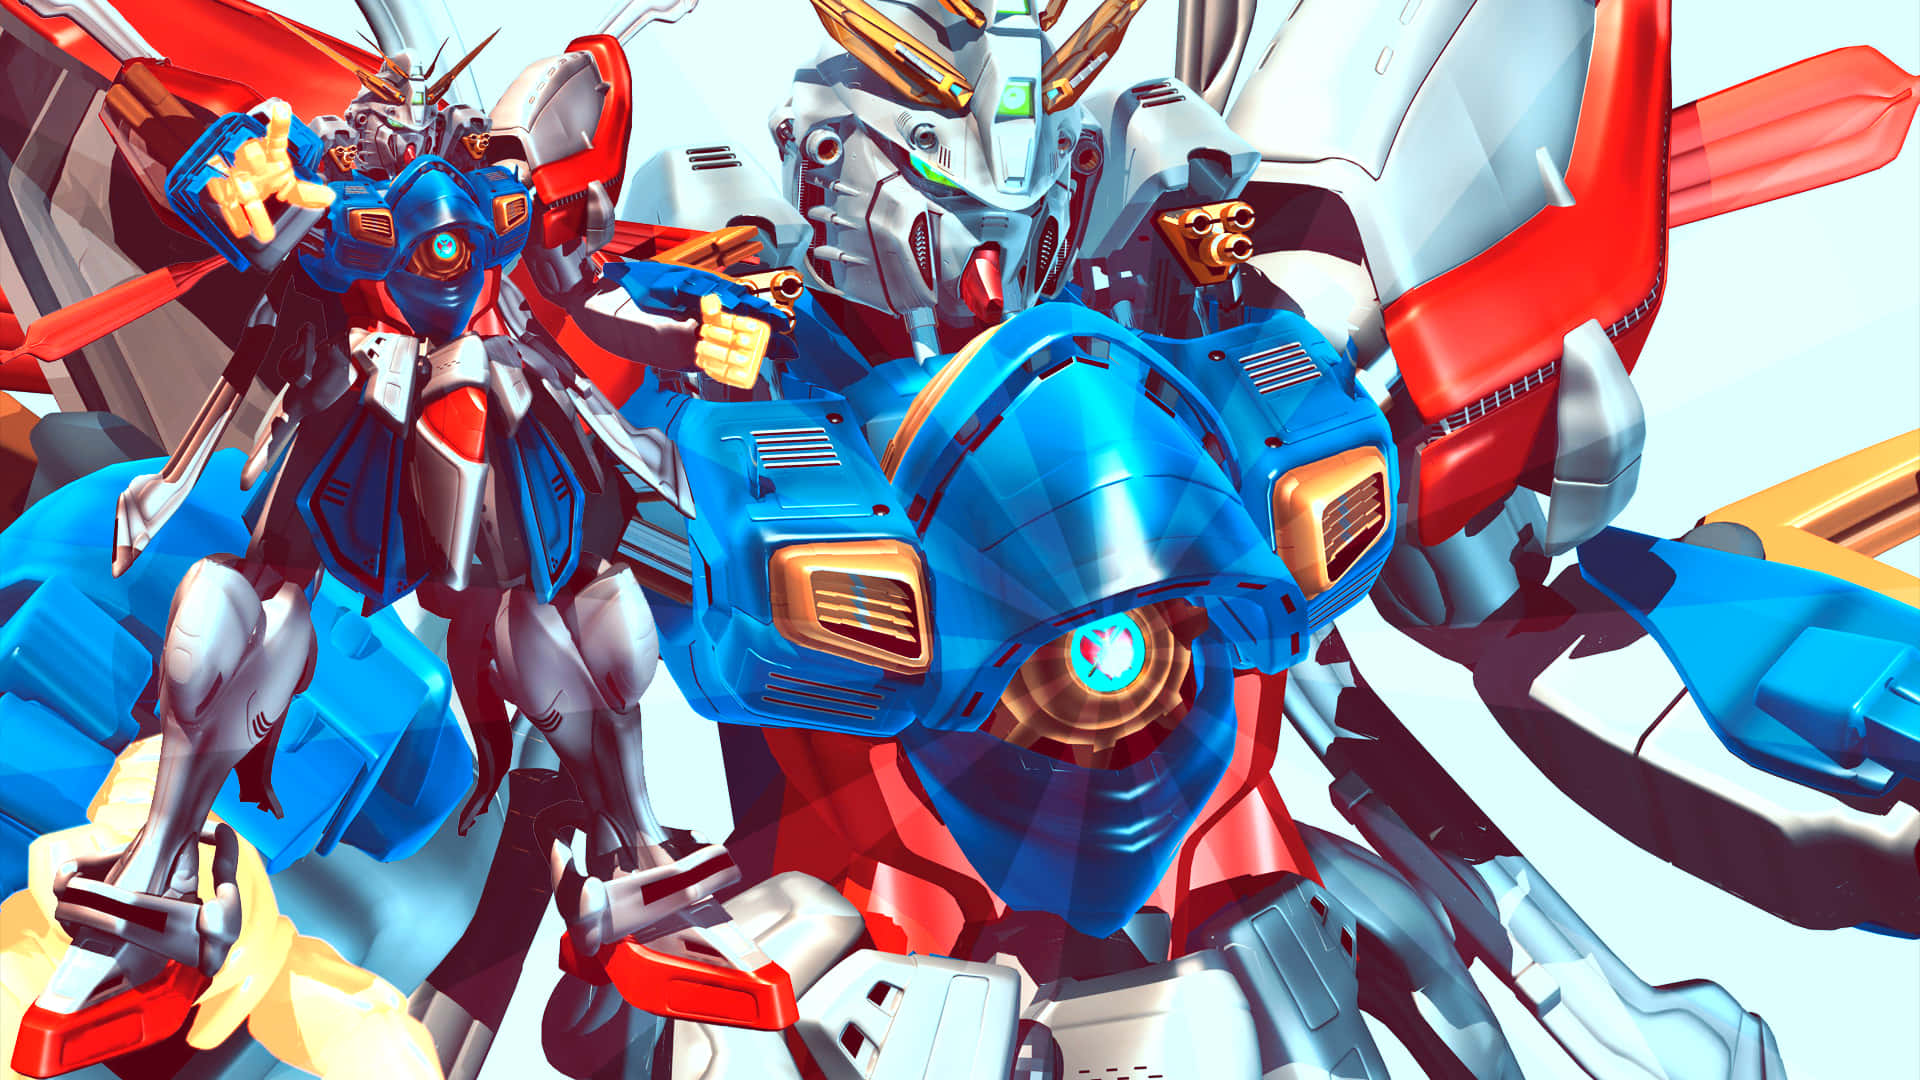 "A detailed artwork of a Gundam Mobile Suit" Wallpaper